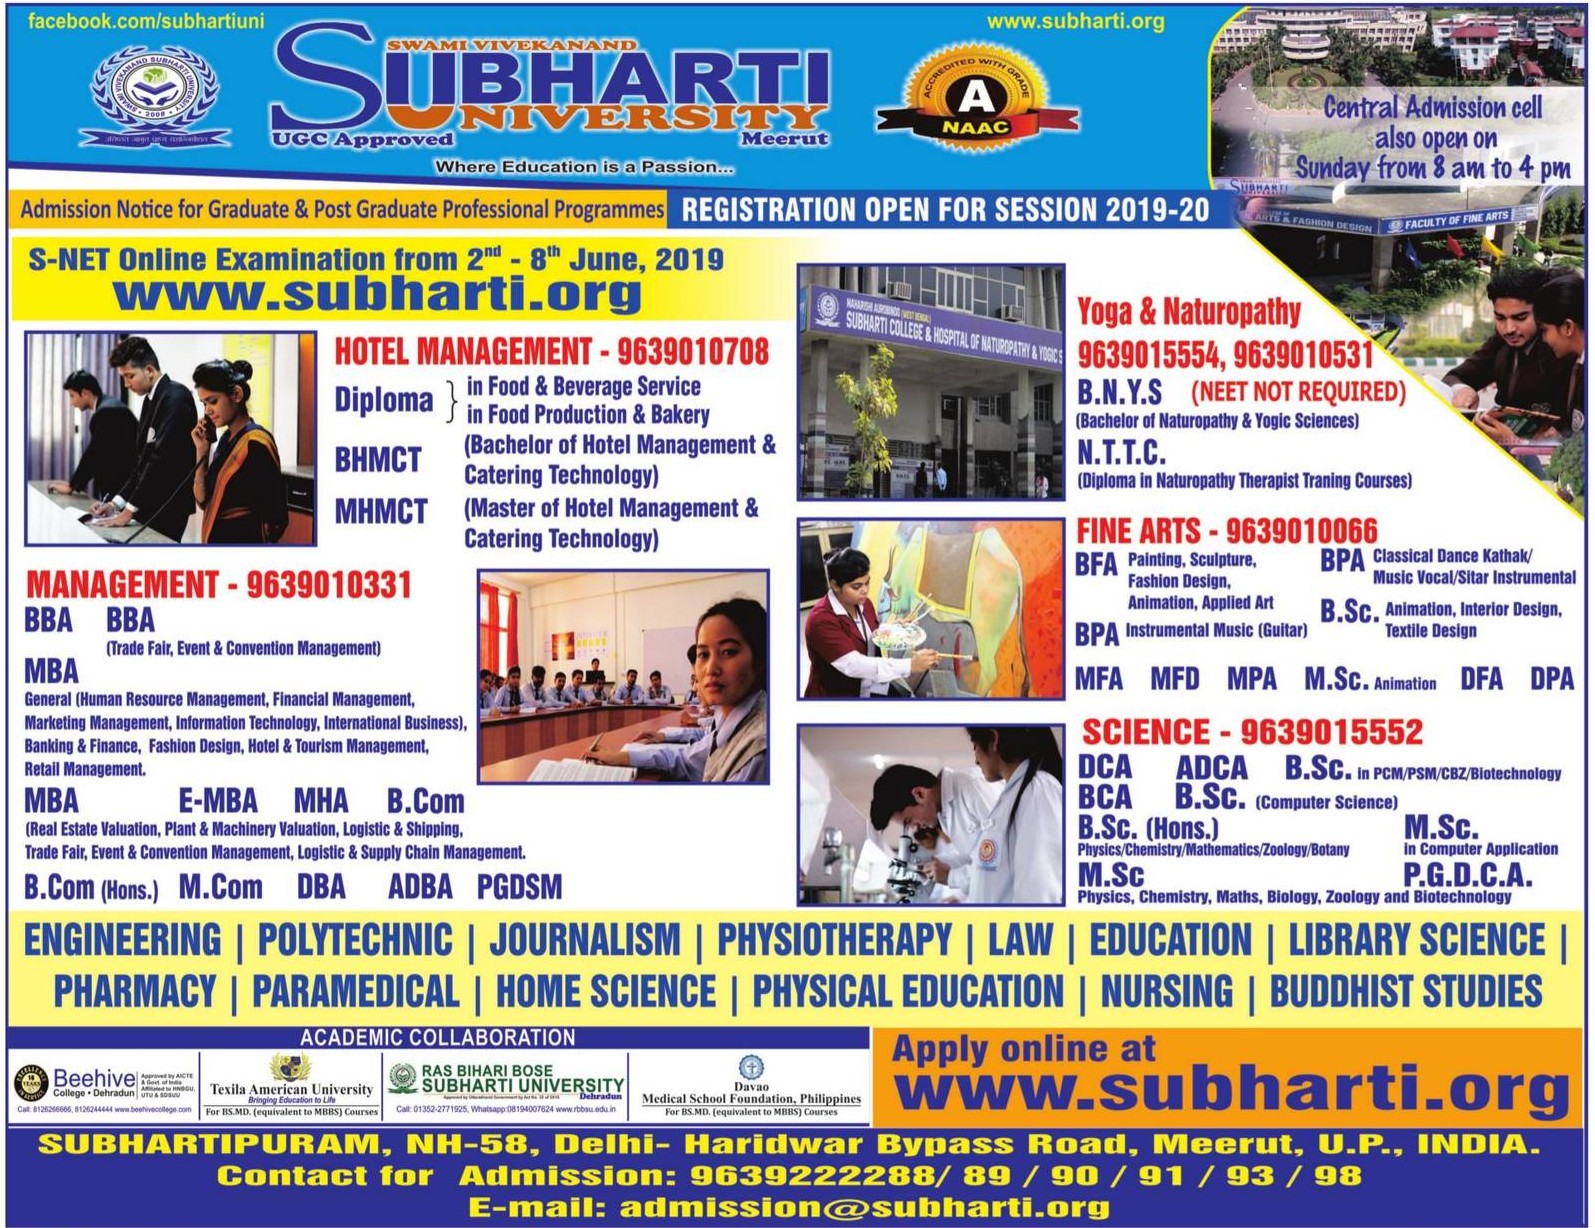 subharti-university-registration-open-for-session-ad-amar-ujala-delhi-06-06-2019.jpg